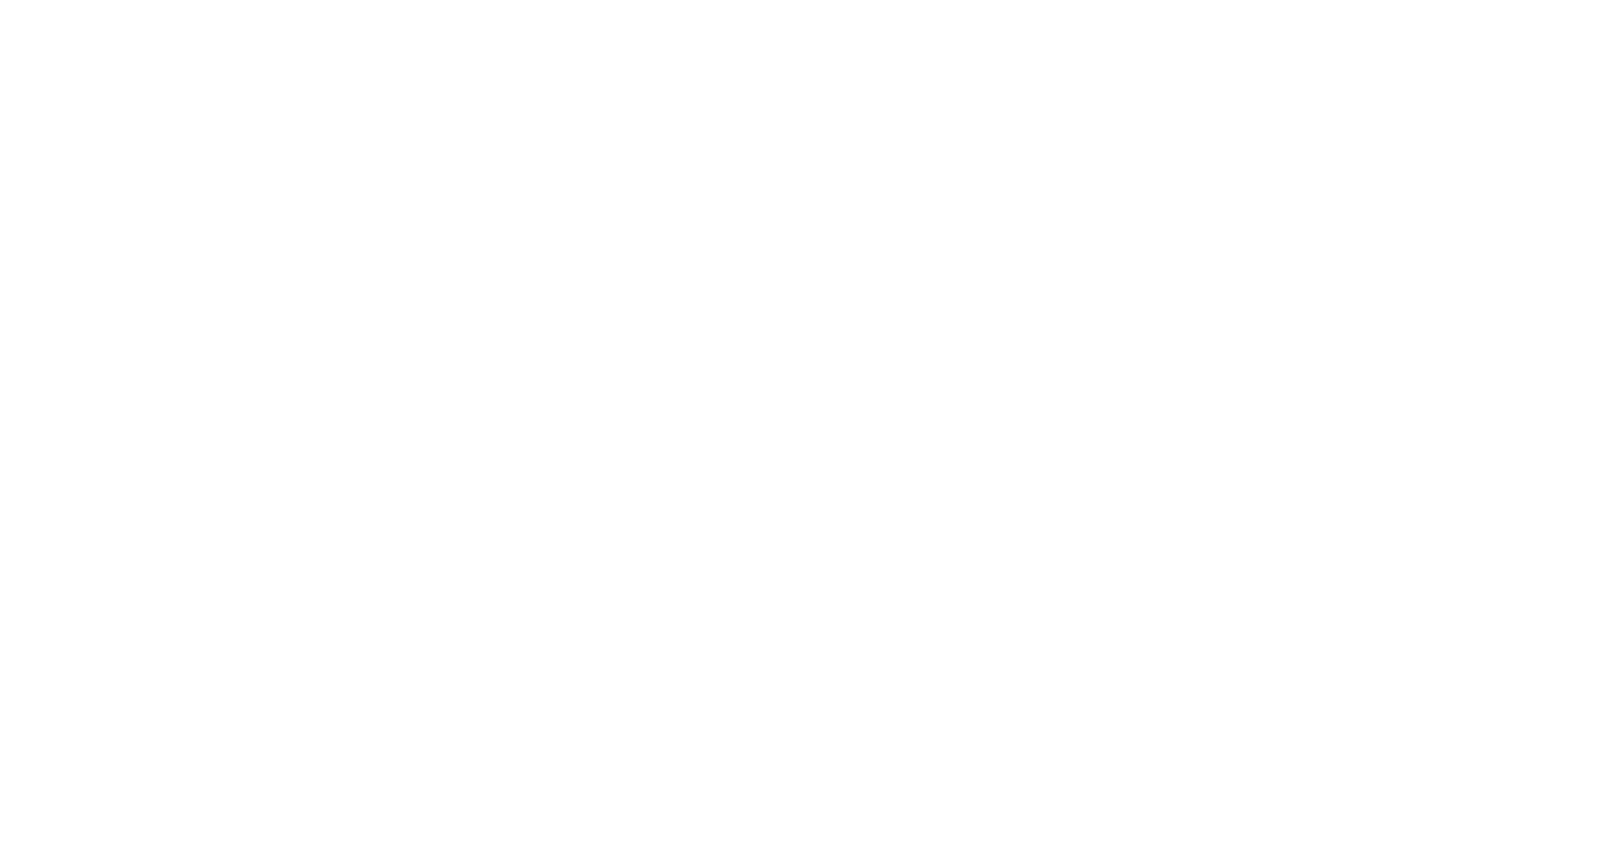 Love my body